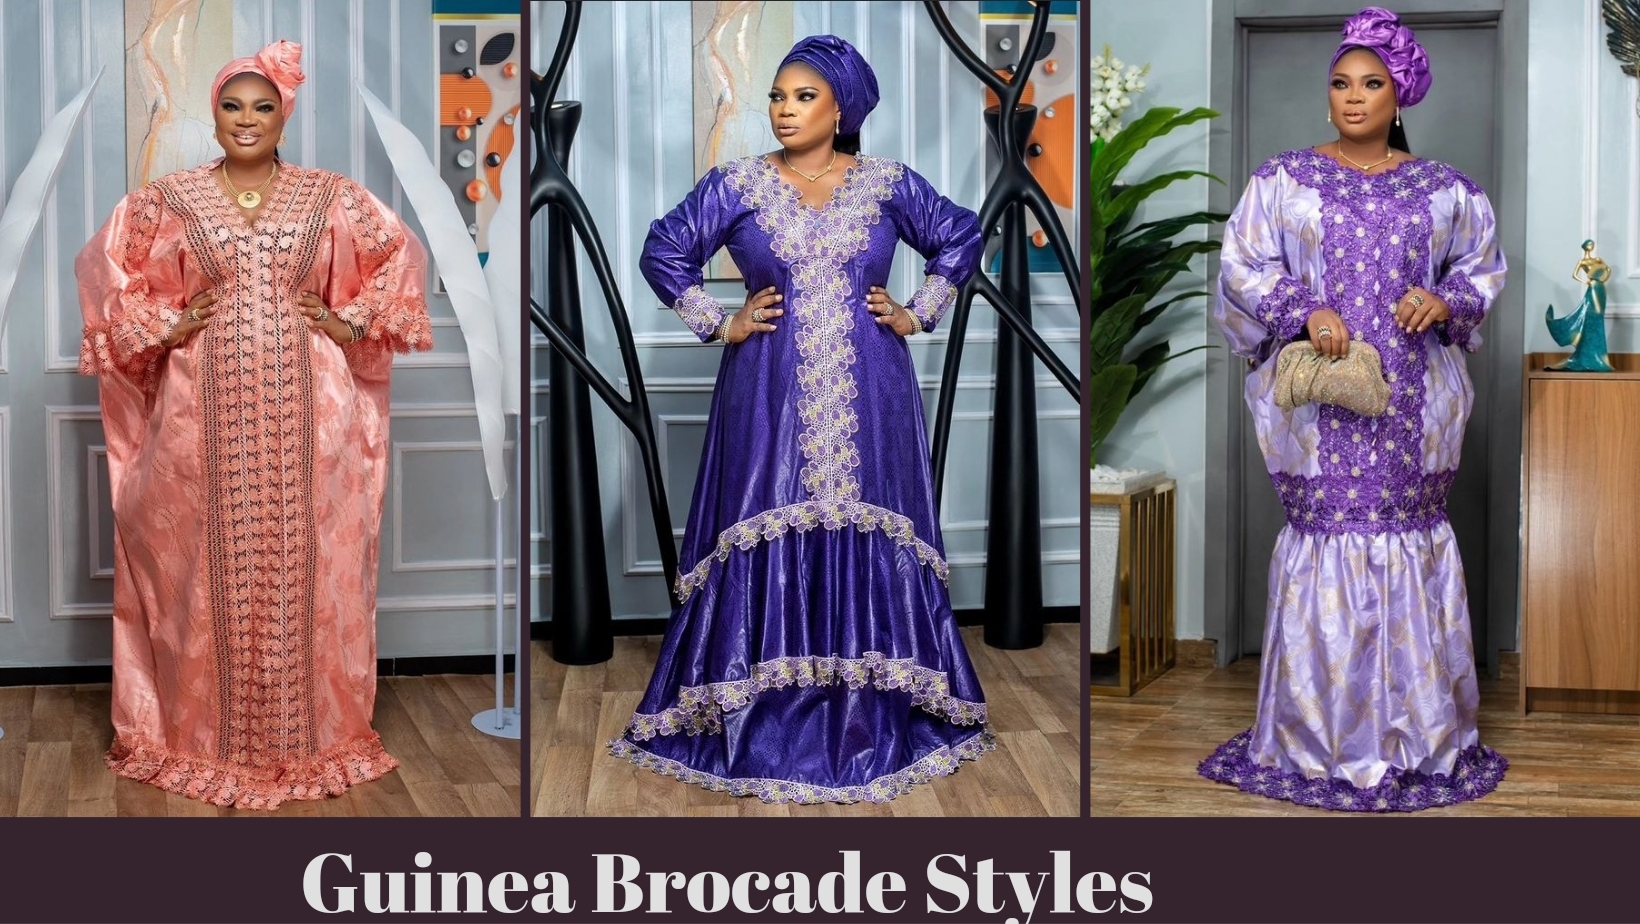 Guinea Brocade Styles